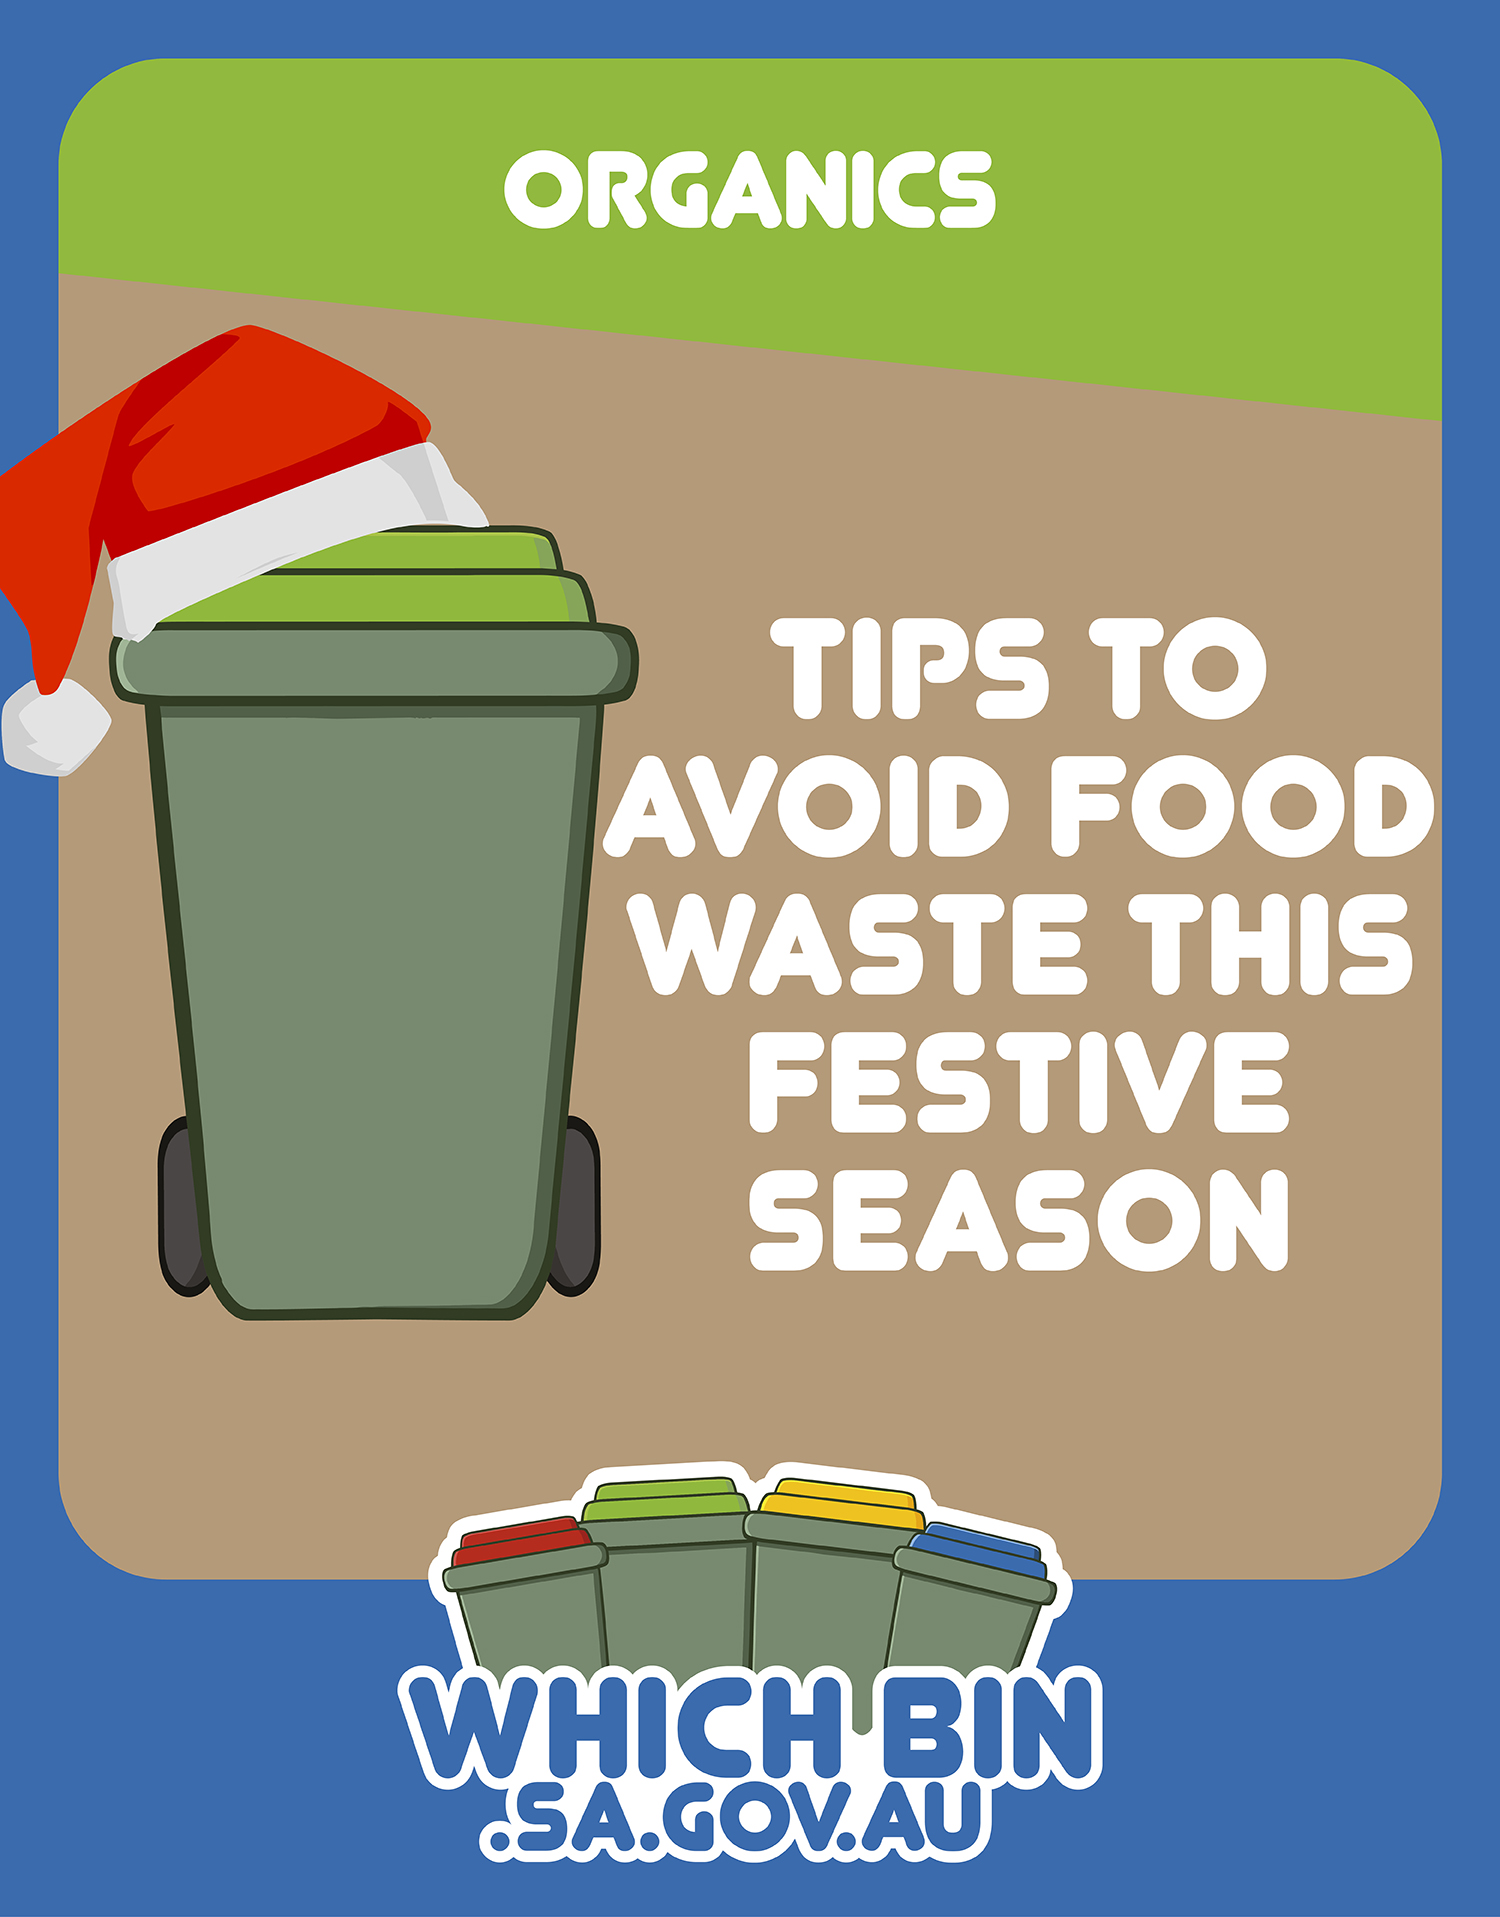 Tips to avoid food waste this festive season